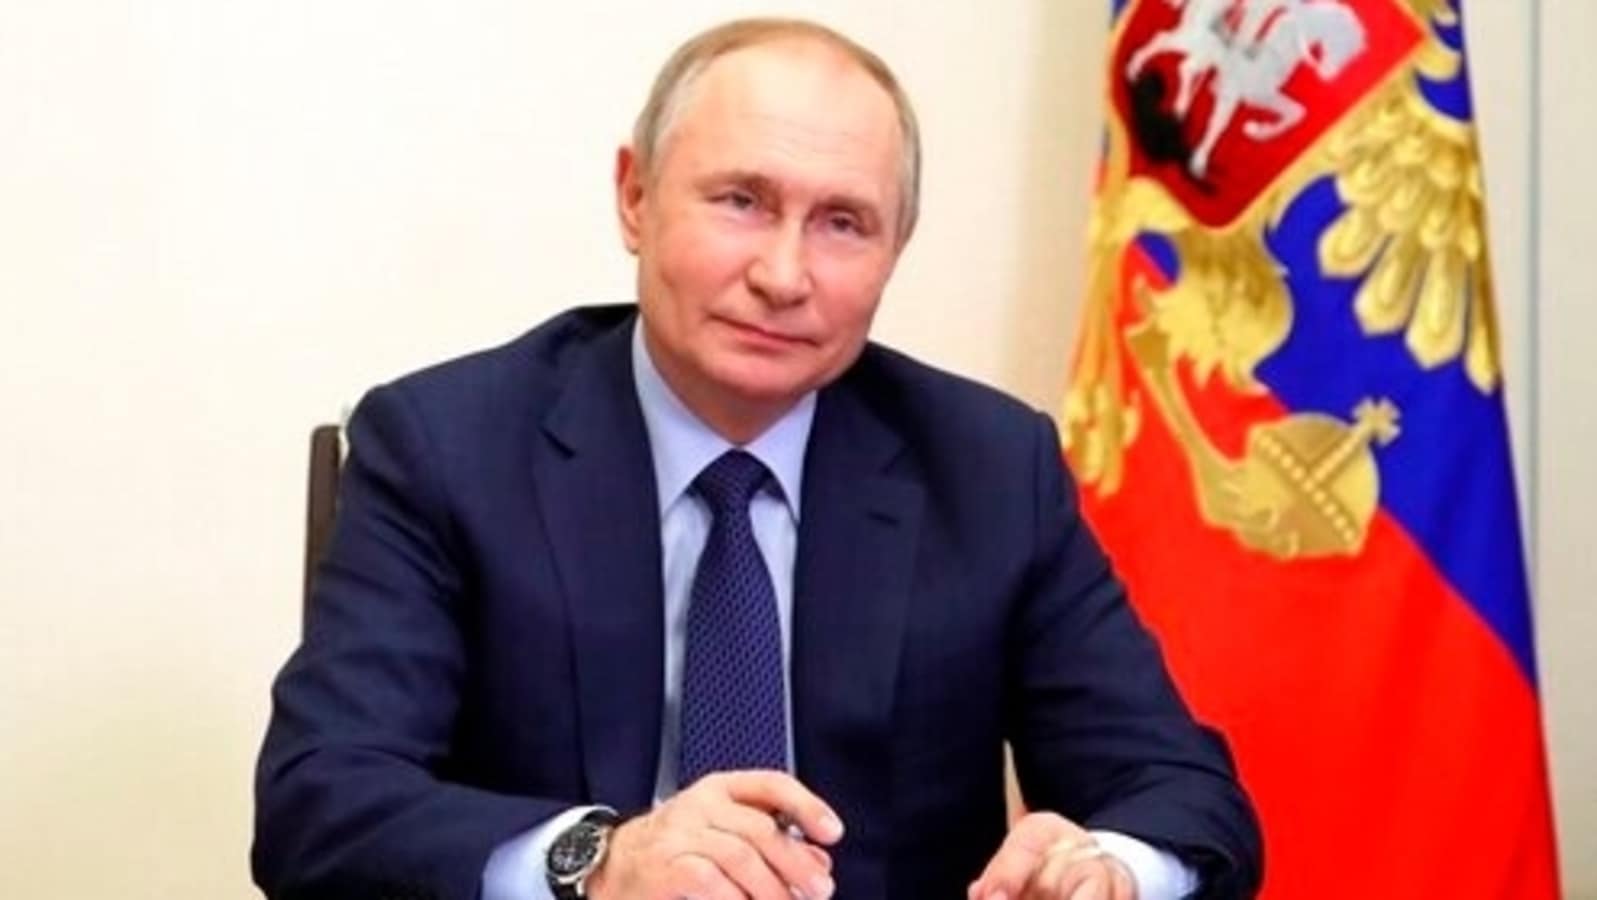 ‘… Saya akan menghajar mereka’, kata Putin dalam menanggapi persyaratan perdamaian Ukraina – Laporkan |  Berita Dunia